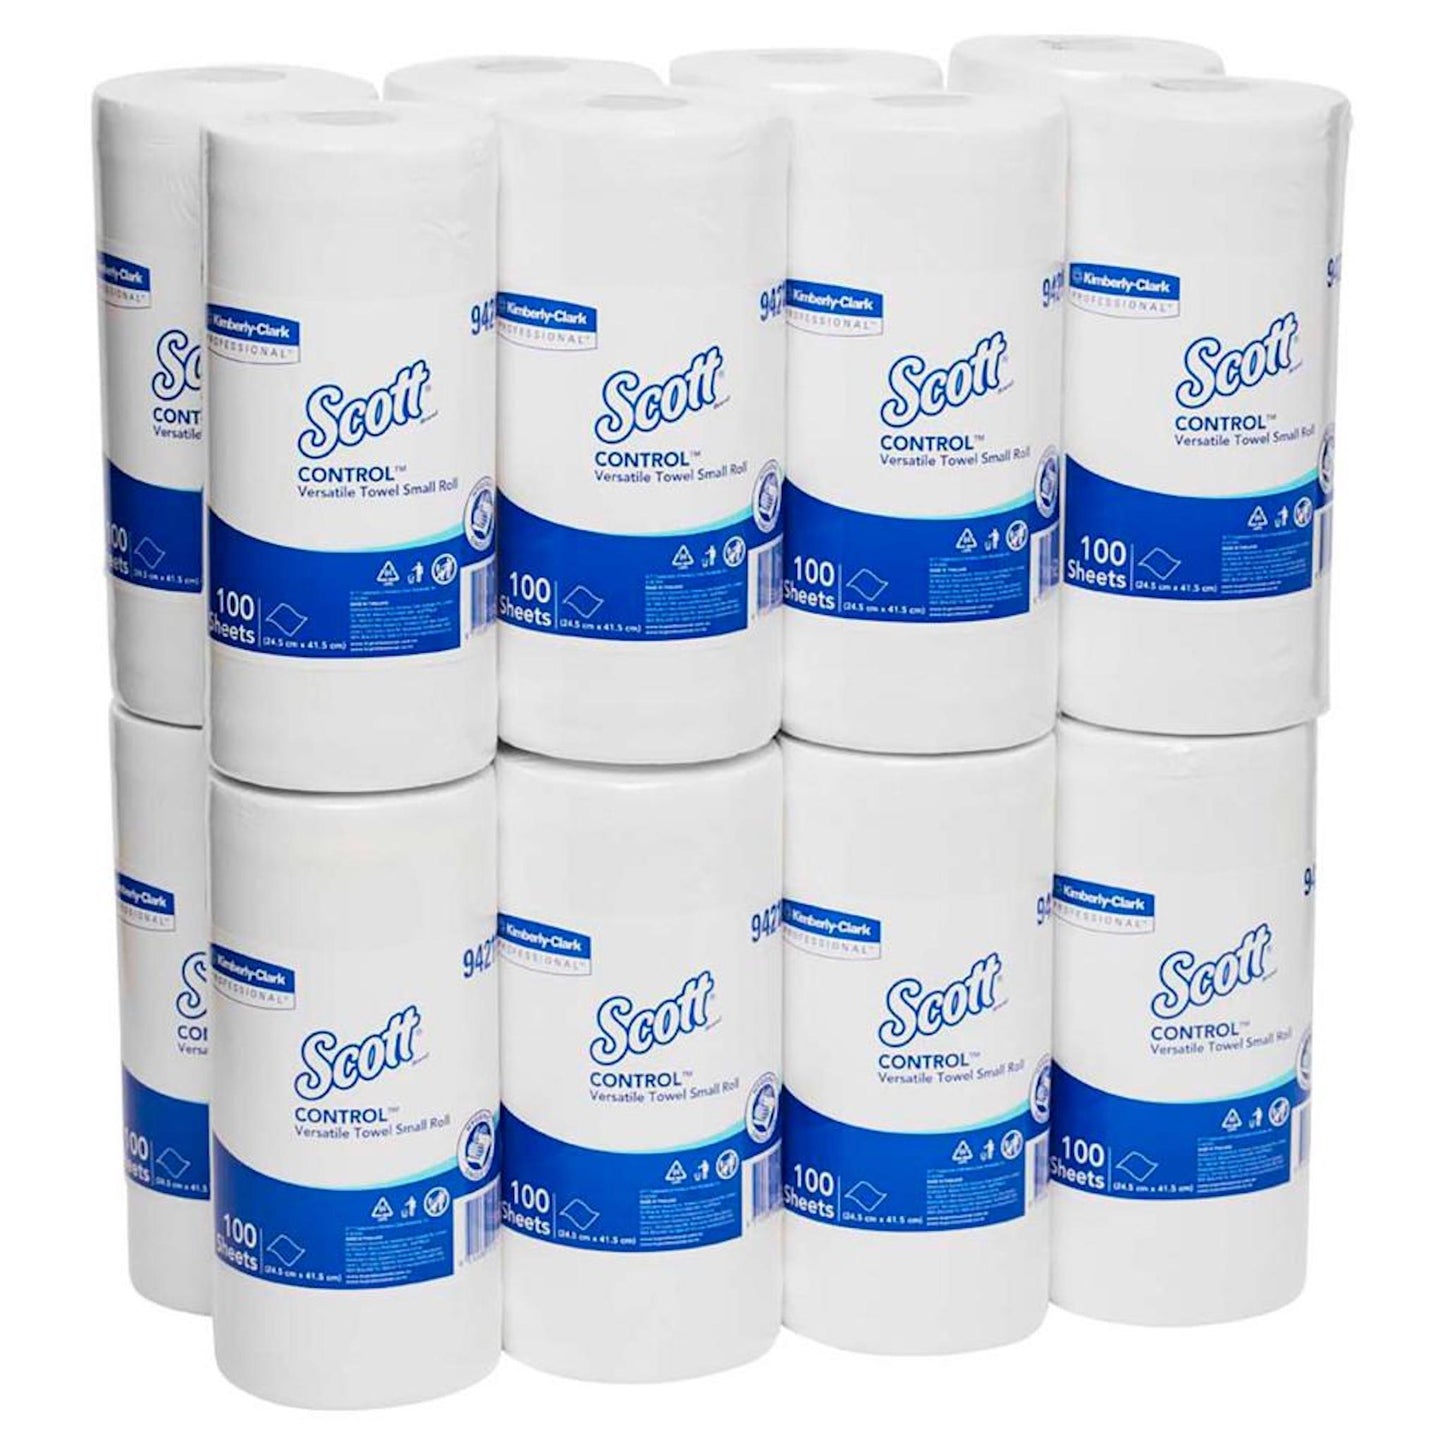 Scott Control 94210 Versatile Towel Roll Muliti-purpose Wipers 24.5 x 41.5cm (S) White - Carton (16 x 100pc Box)